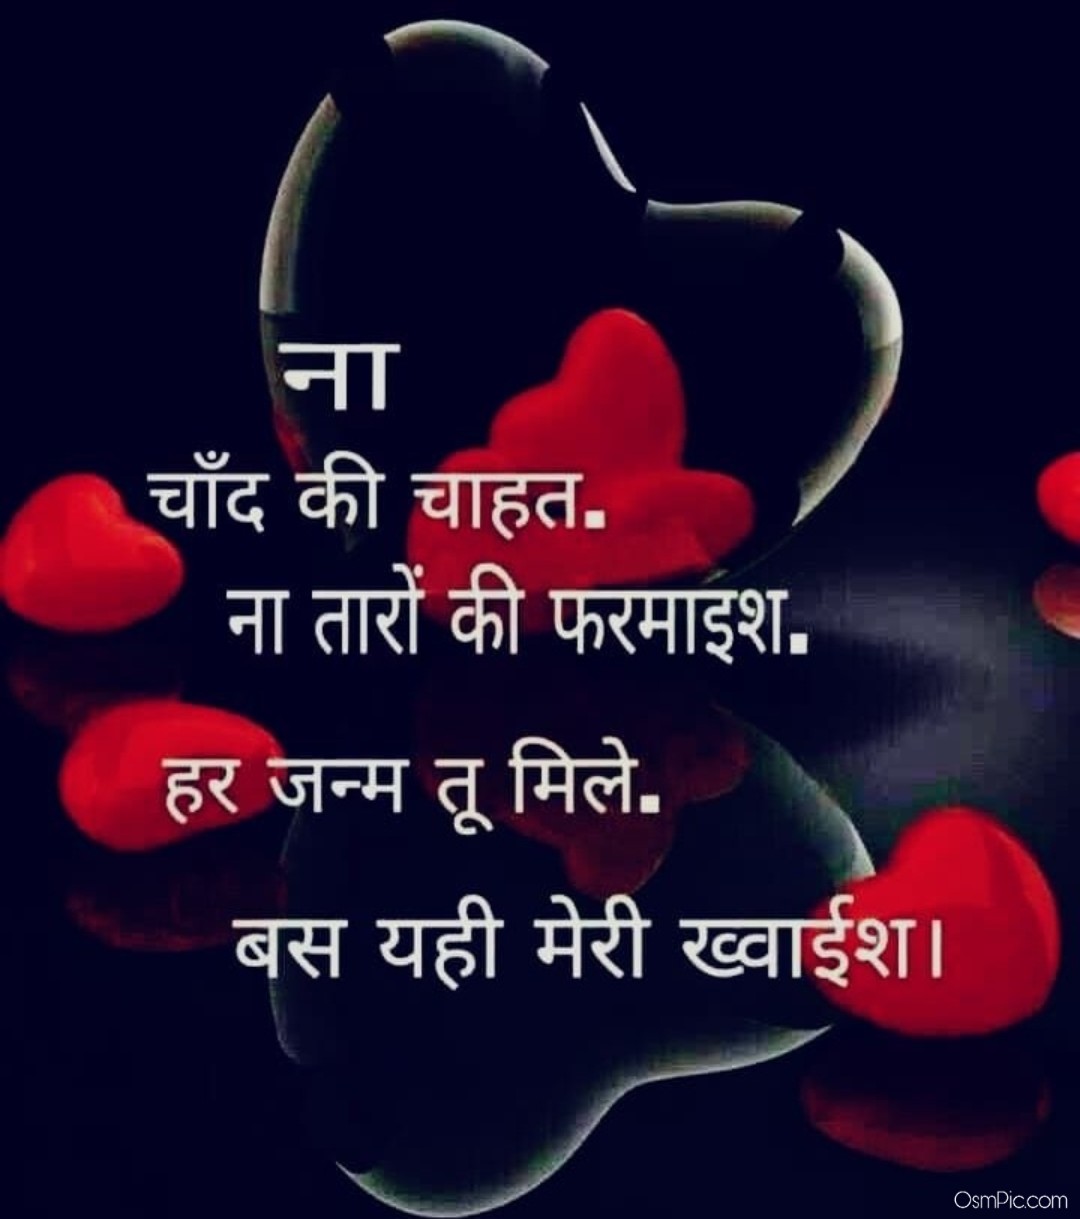 Hindi Whatsapp Status Images Dp Pic Life, Love, Sad, Attitude Whatsapp Dp I...